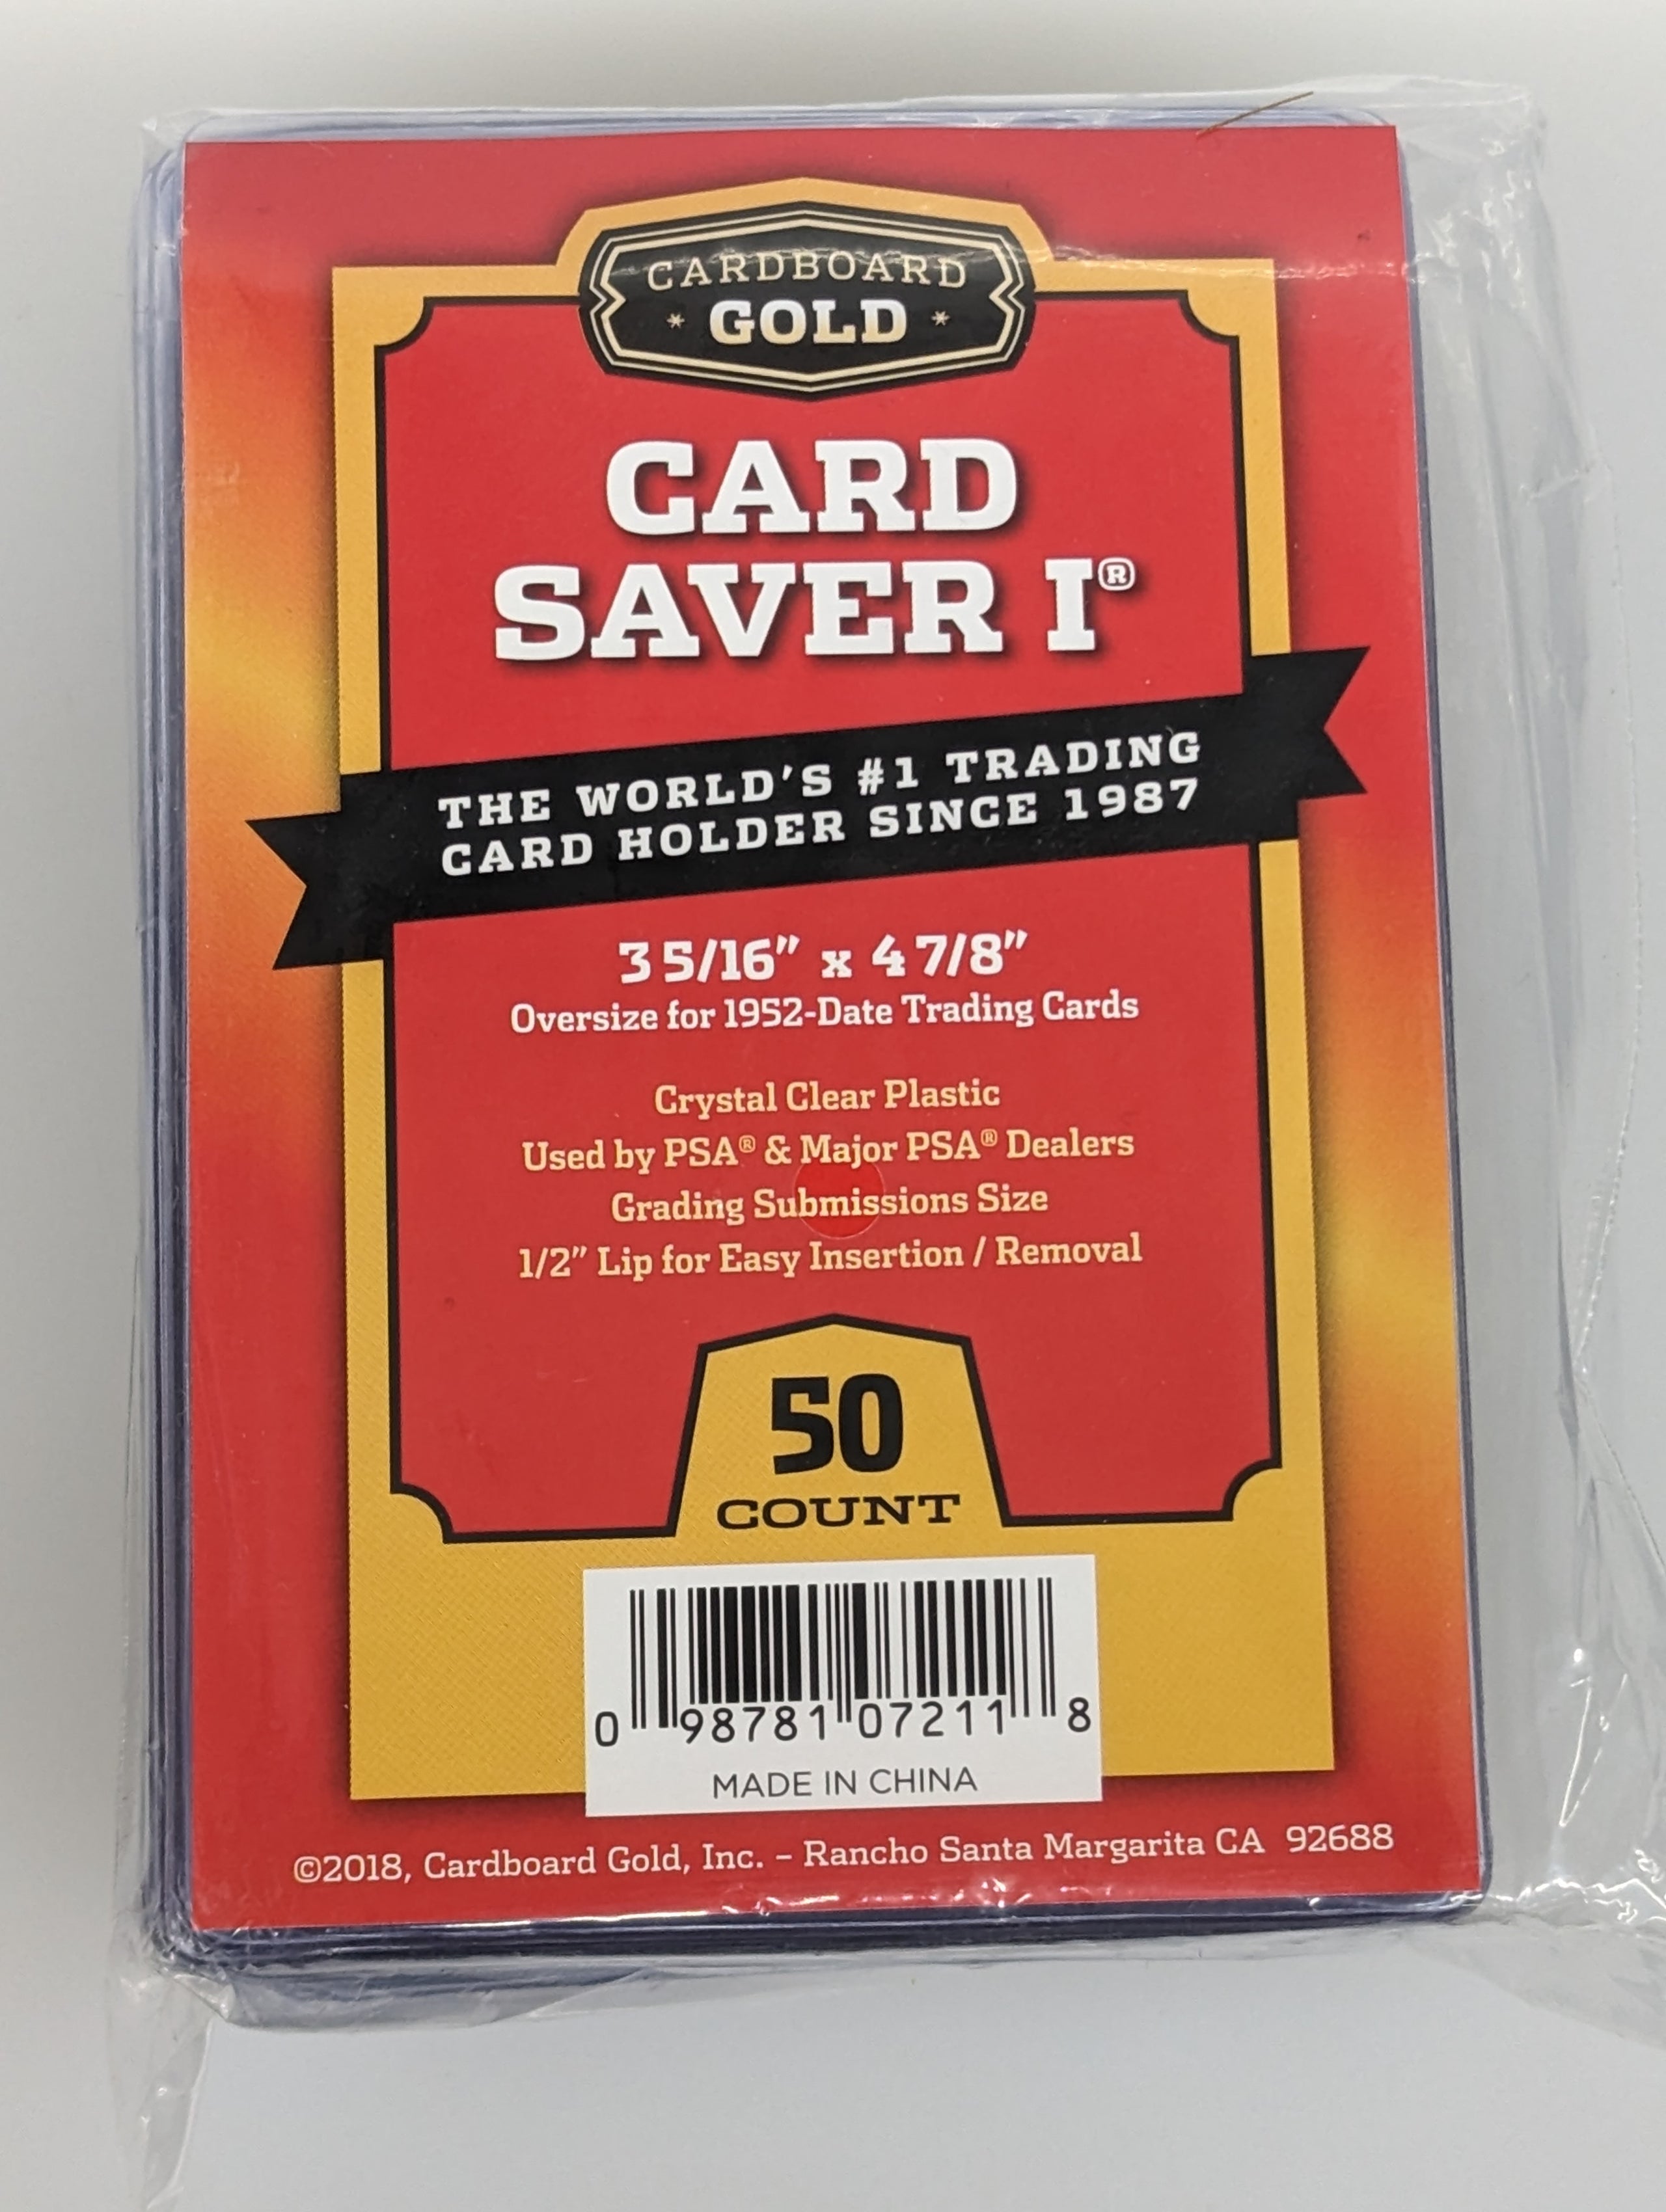 Cardboard Gold Card Saver II - 50 Count!